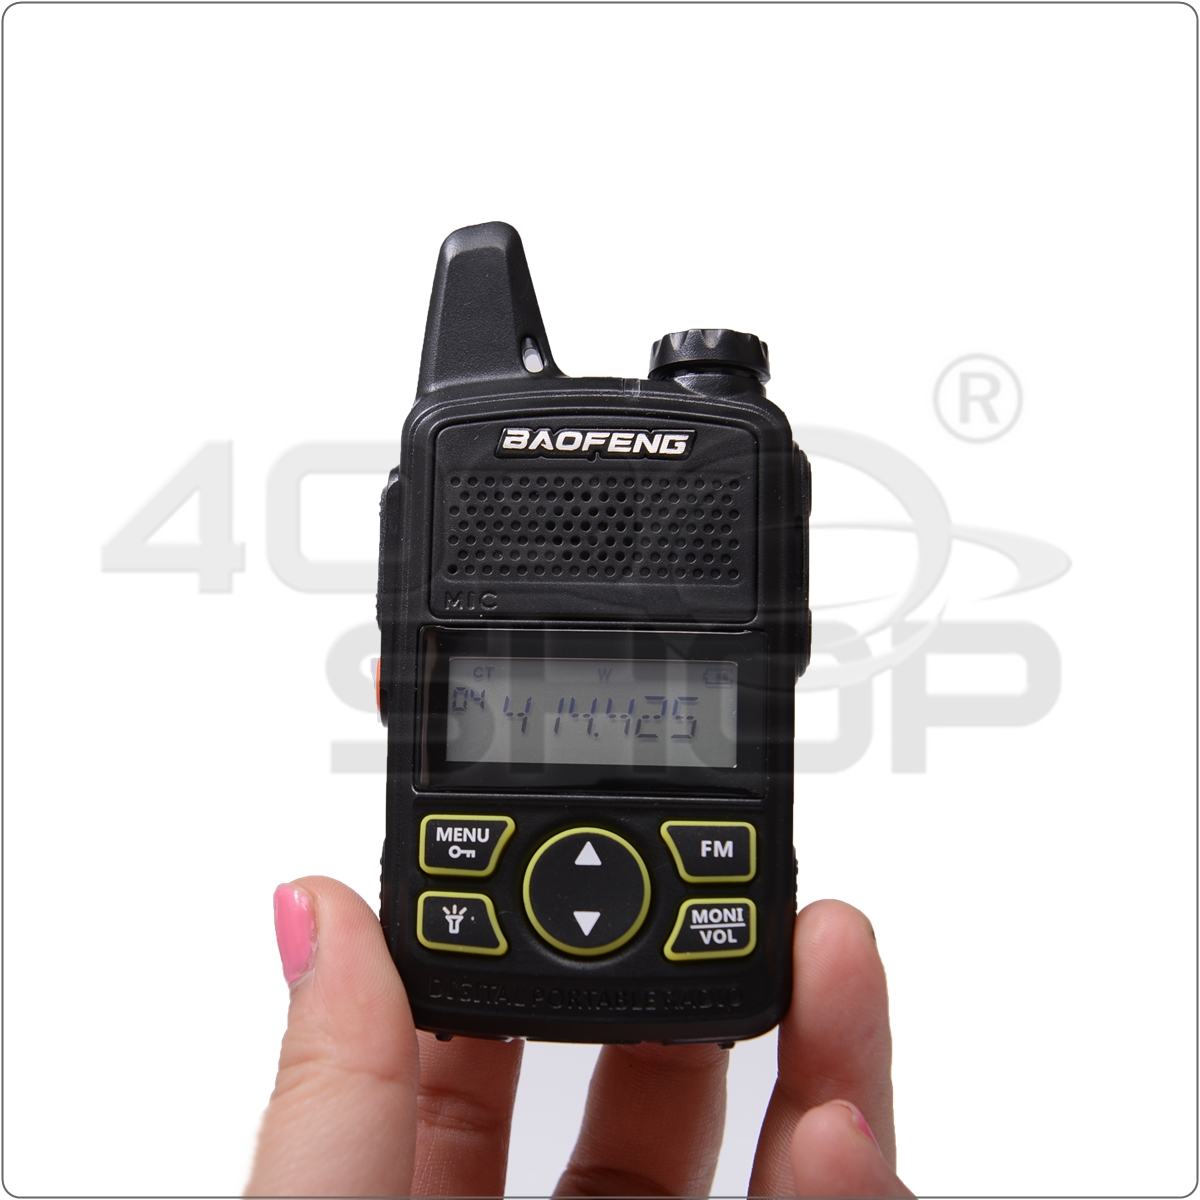 2x BAOFENG BF-T1 UHF 400-420mhz mini walkie talkie FREE 1x USB prog cable